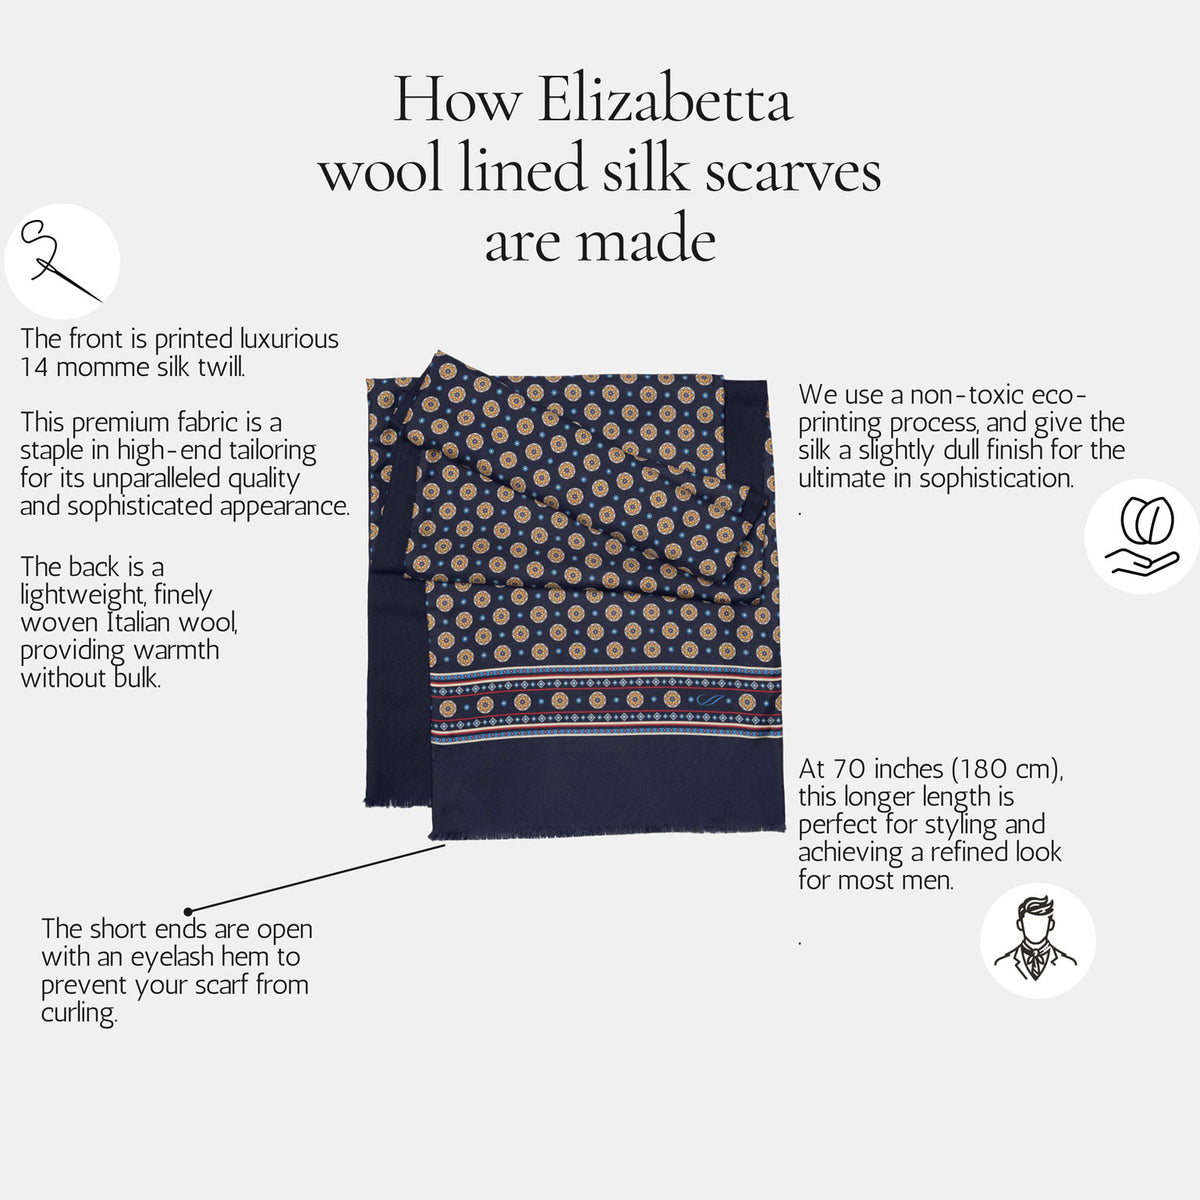 How Elizabetta wool lined silk scarf is made